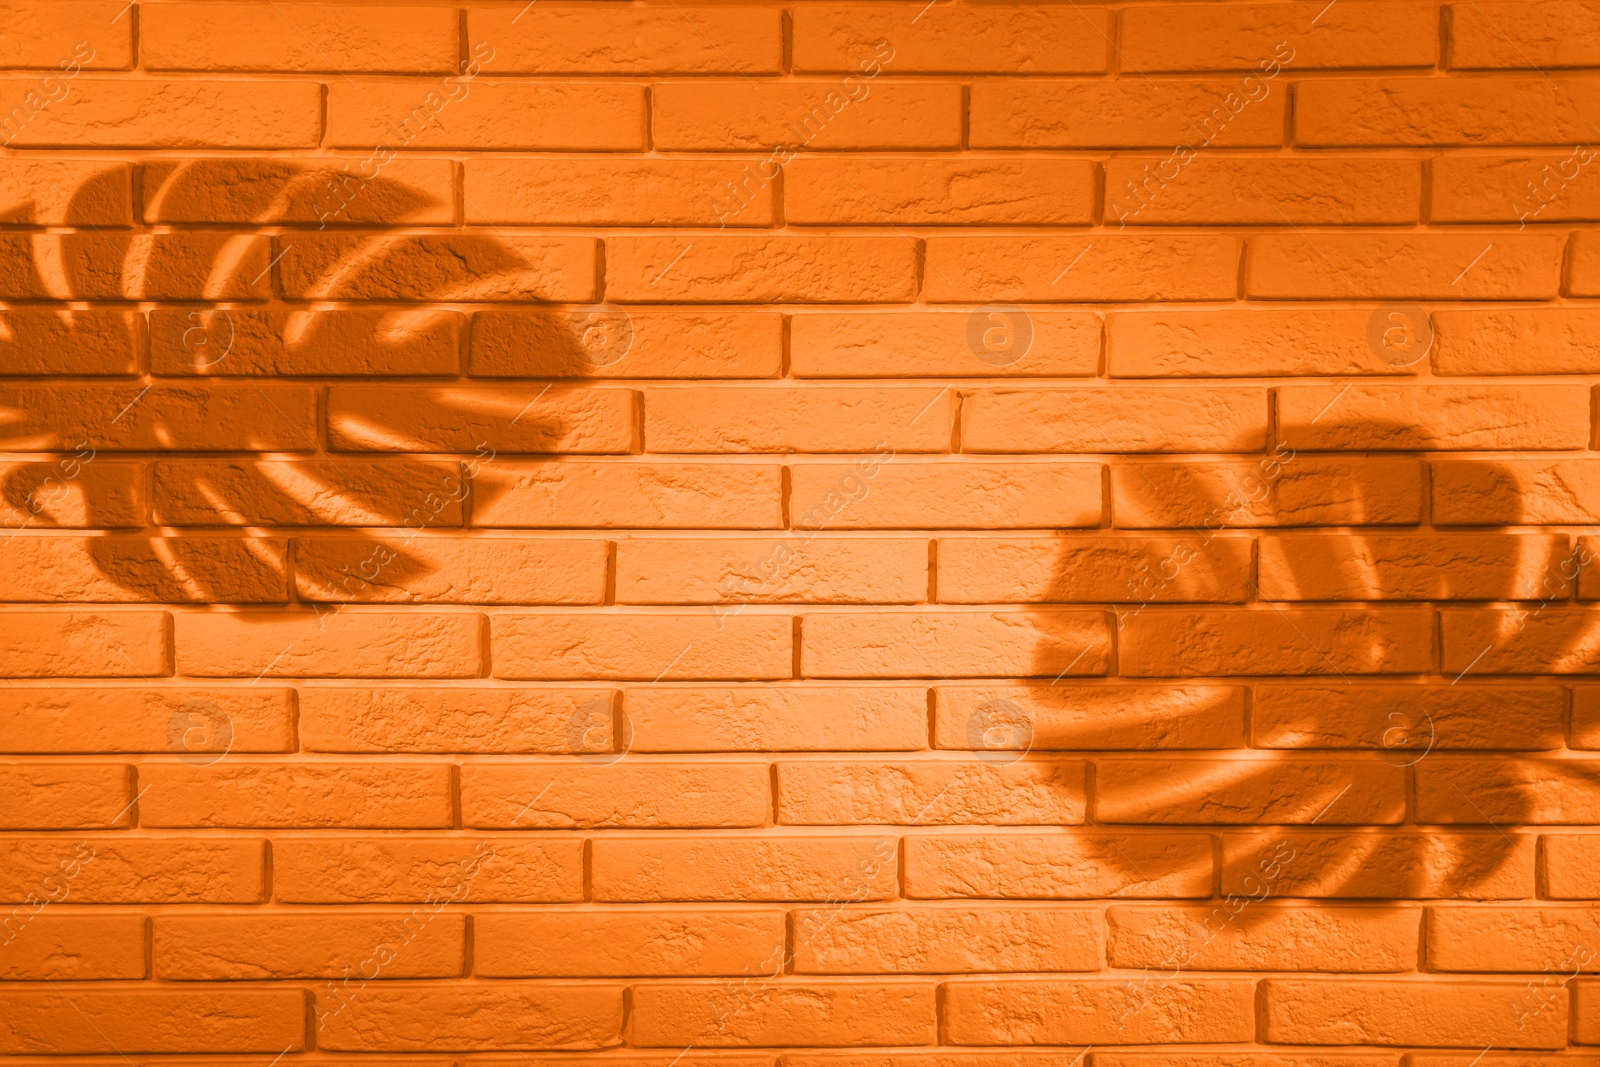 Image of Shadows of monstera leaves on orange brick wall